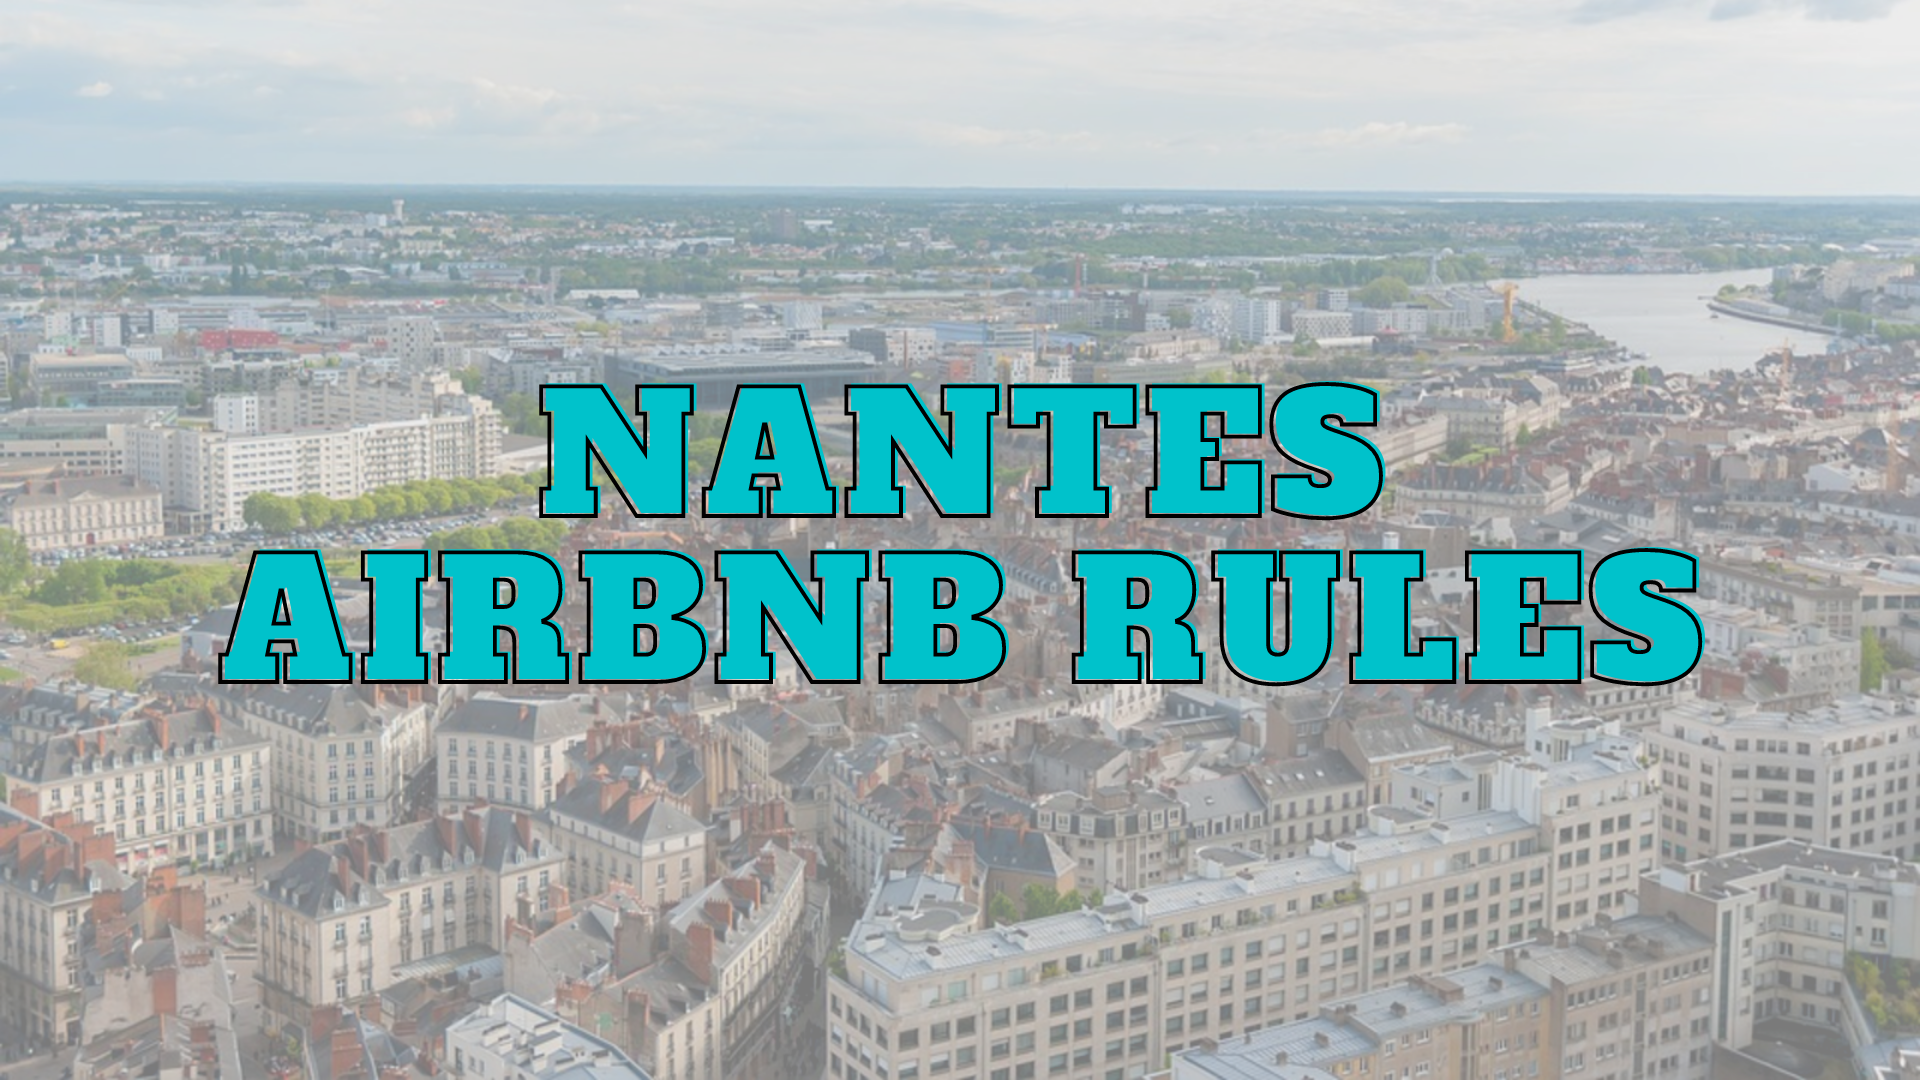 nantes airbnb rules